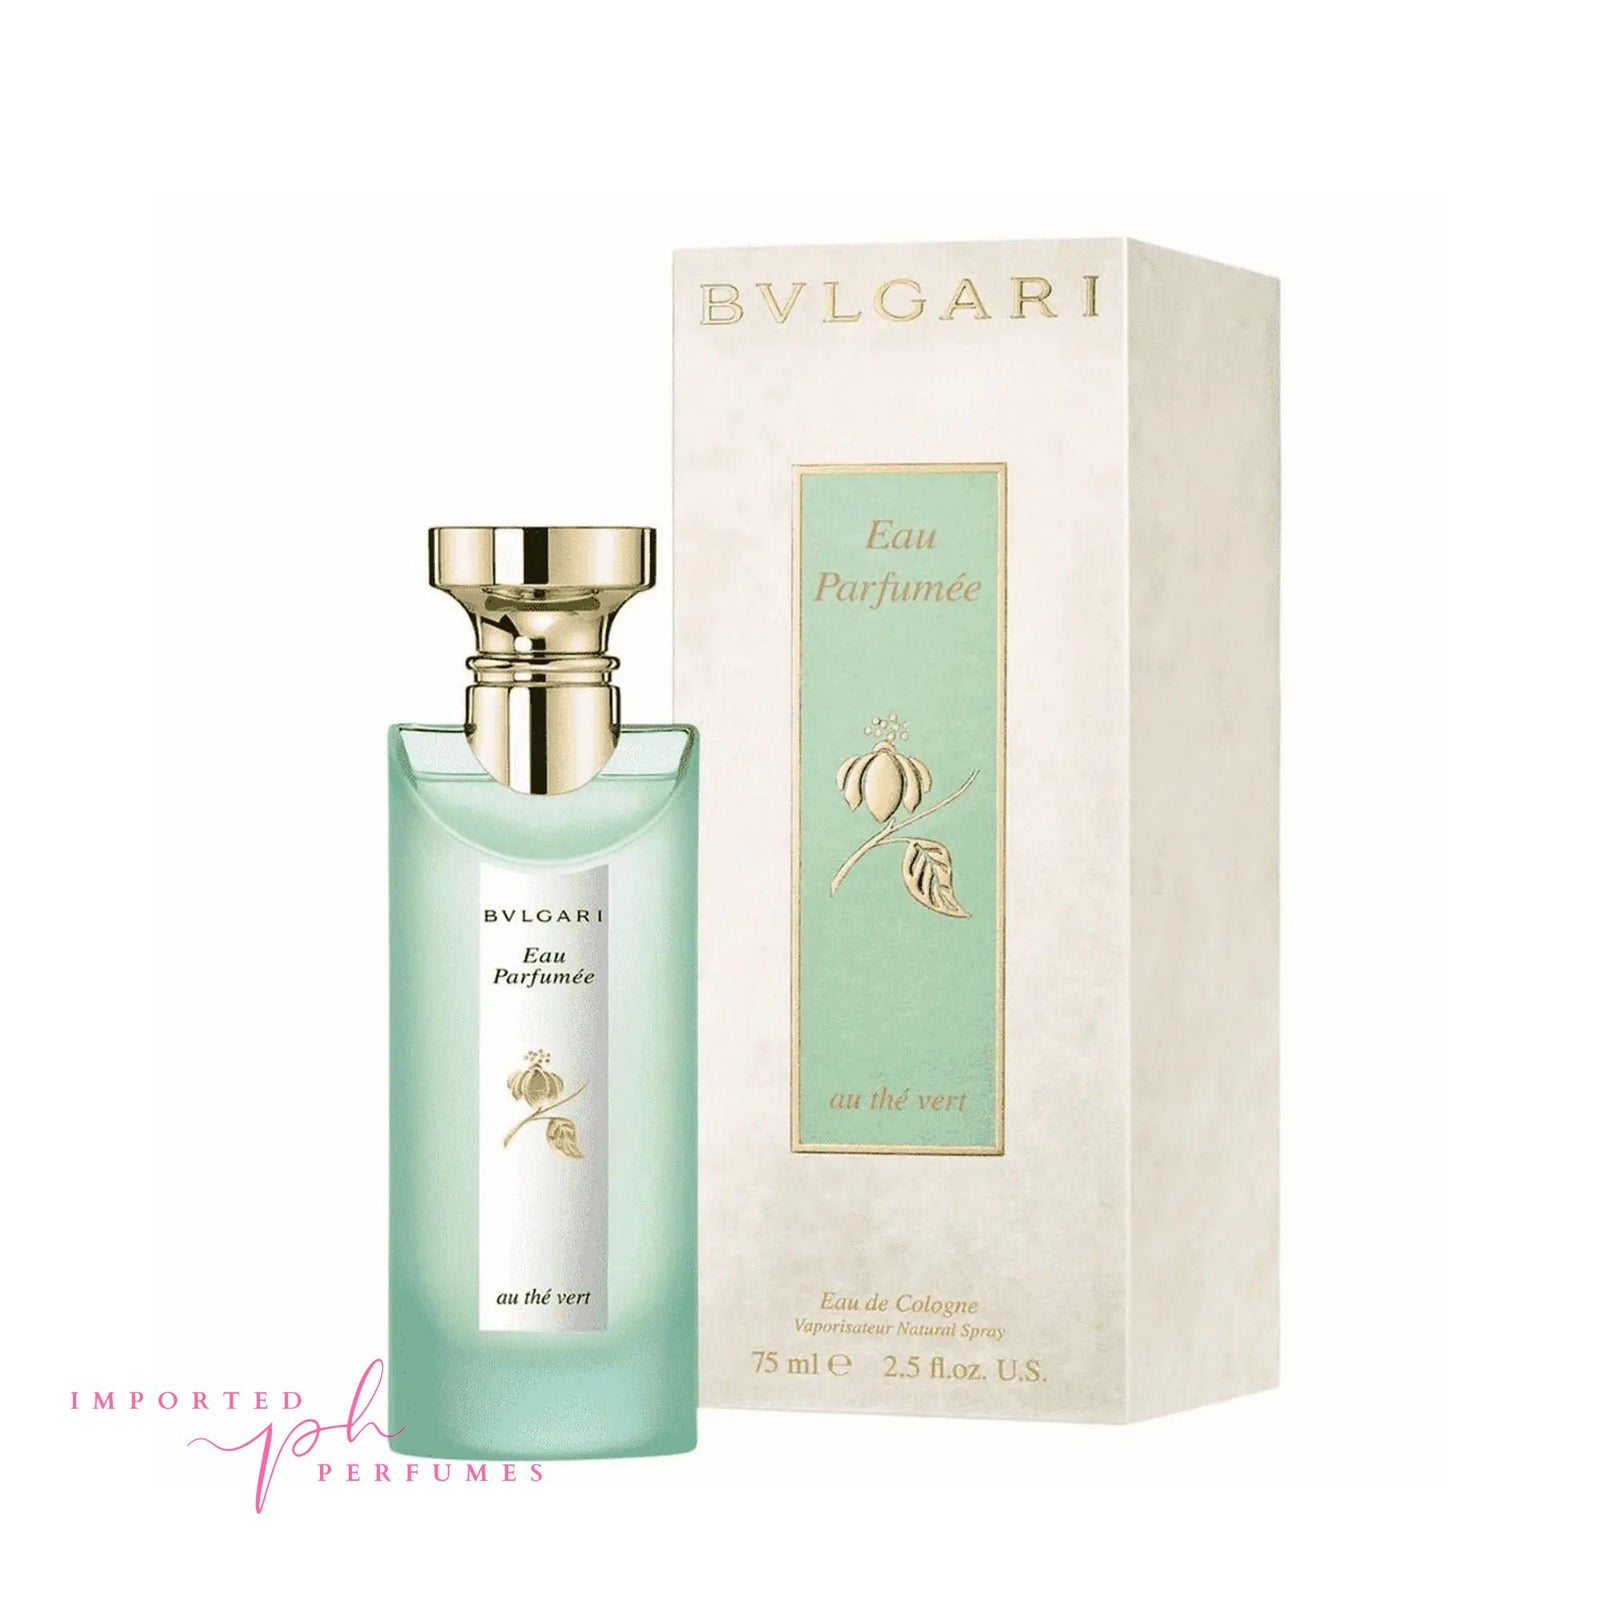 Bvlgari Eau Parfumee Au The Vert For Unisex 75ml Imported Perfumes & Beauty Store